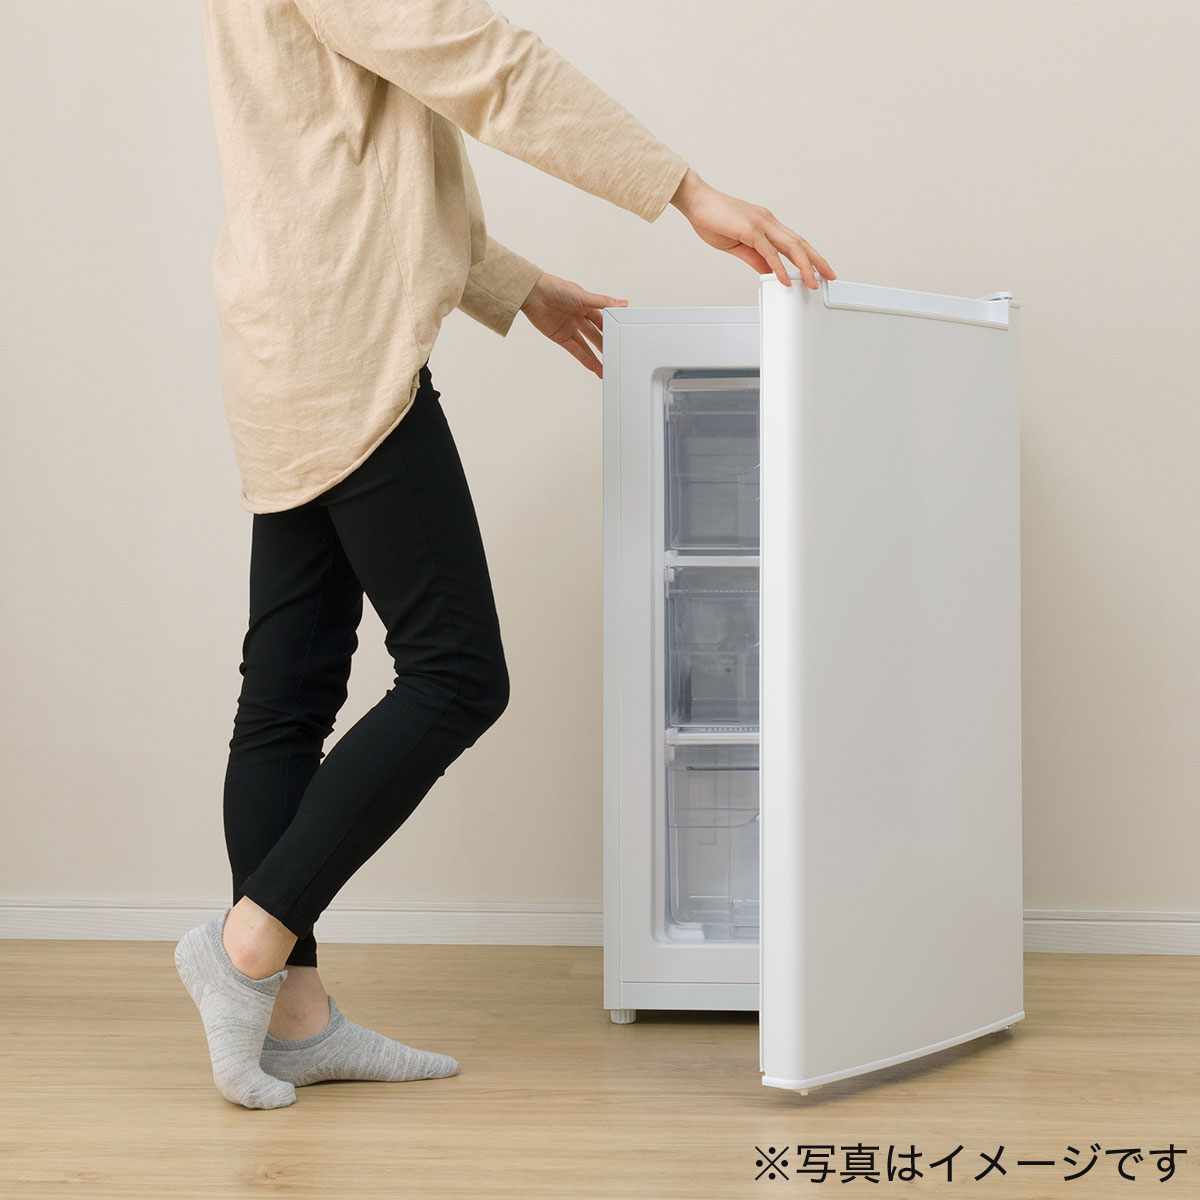 60L 1ドア冷凍庫(NTR60)(リサイクル回収有り)通販 ニトリネット【公式】 家具・インテリア通販